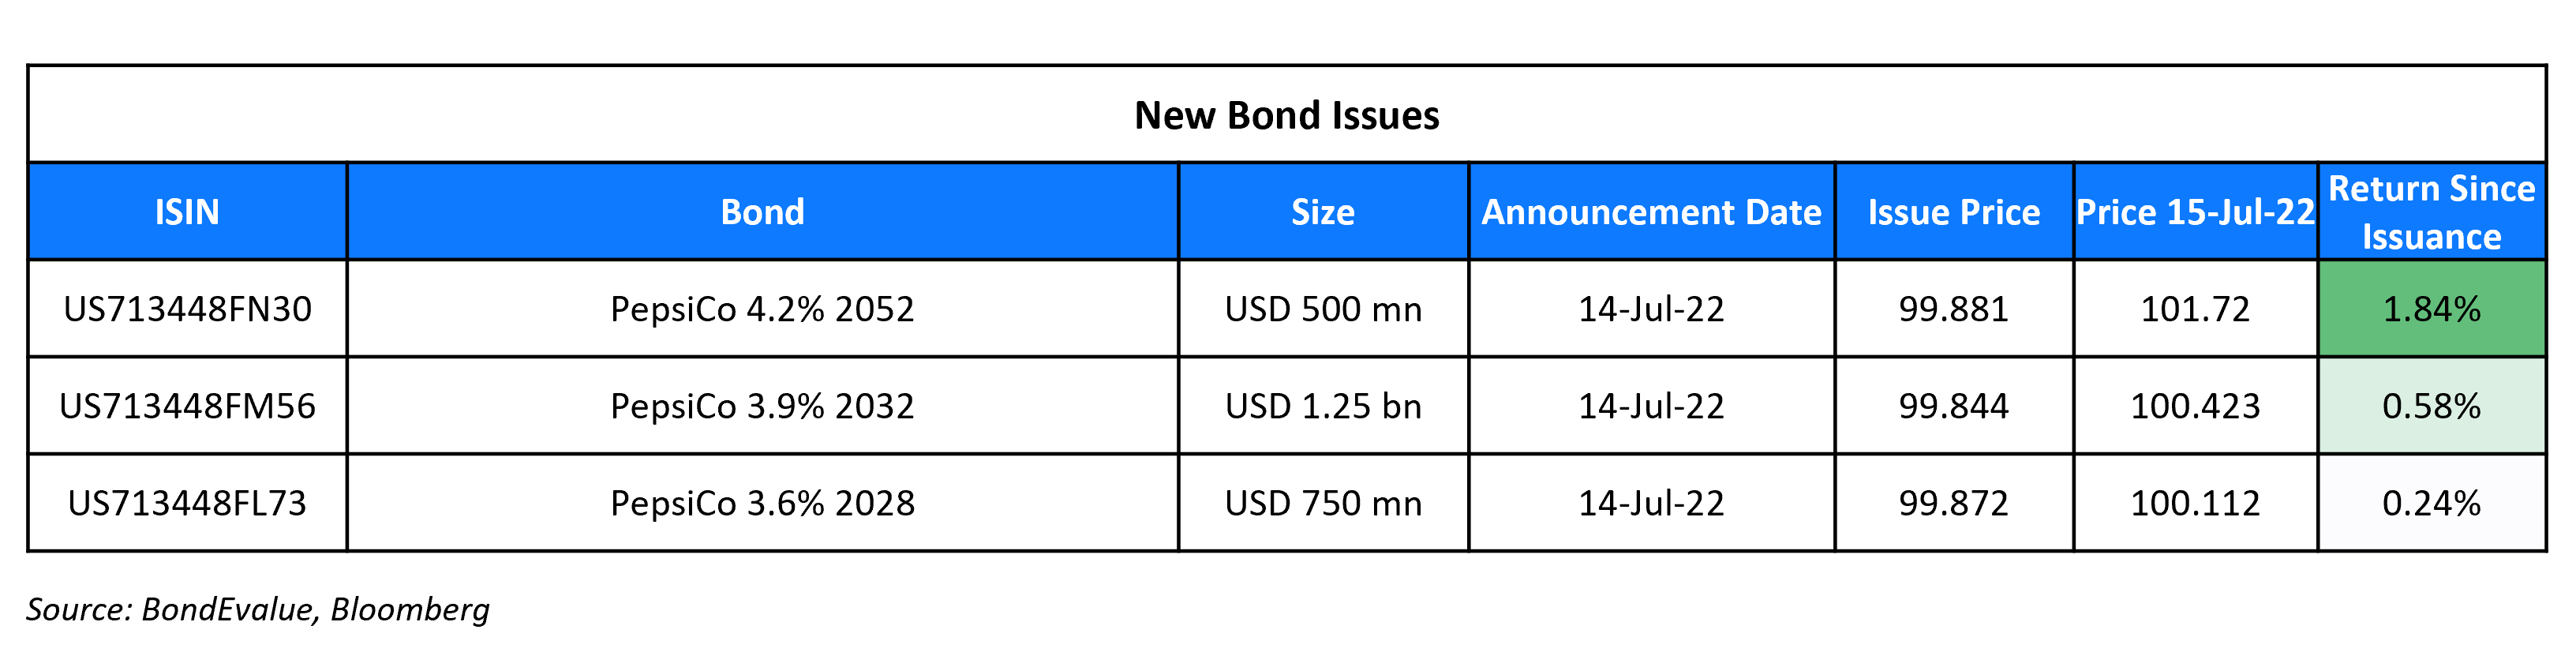 New Bond Issues 15 Jul 22